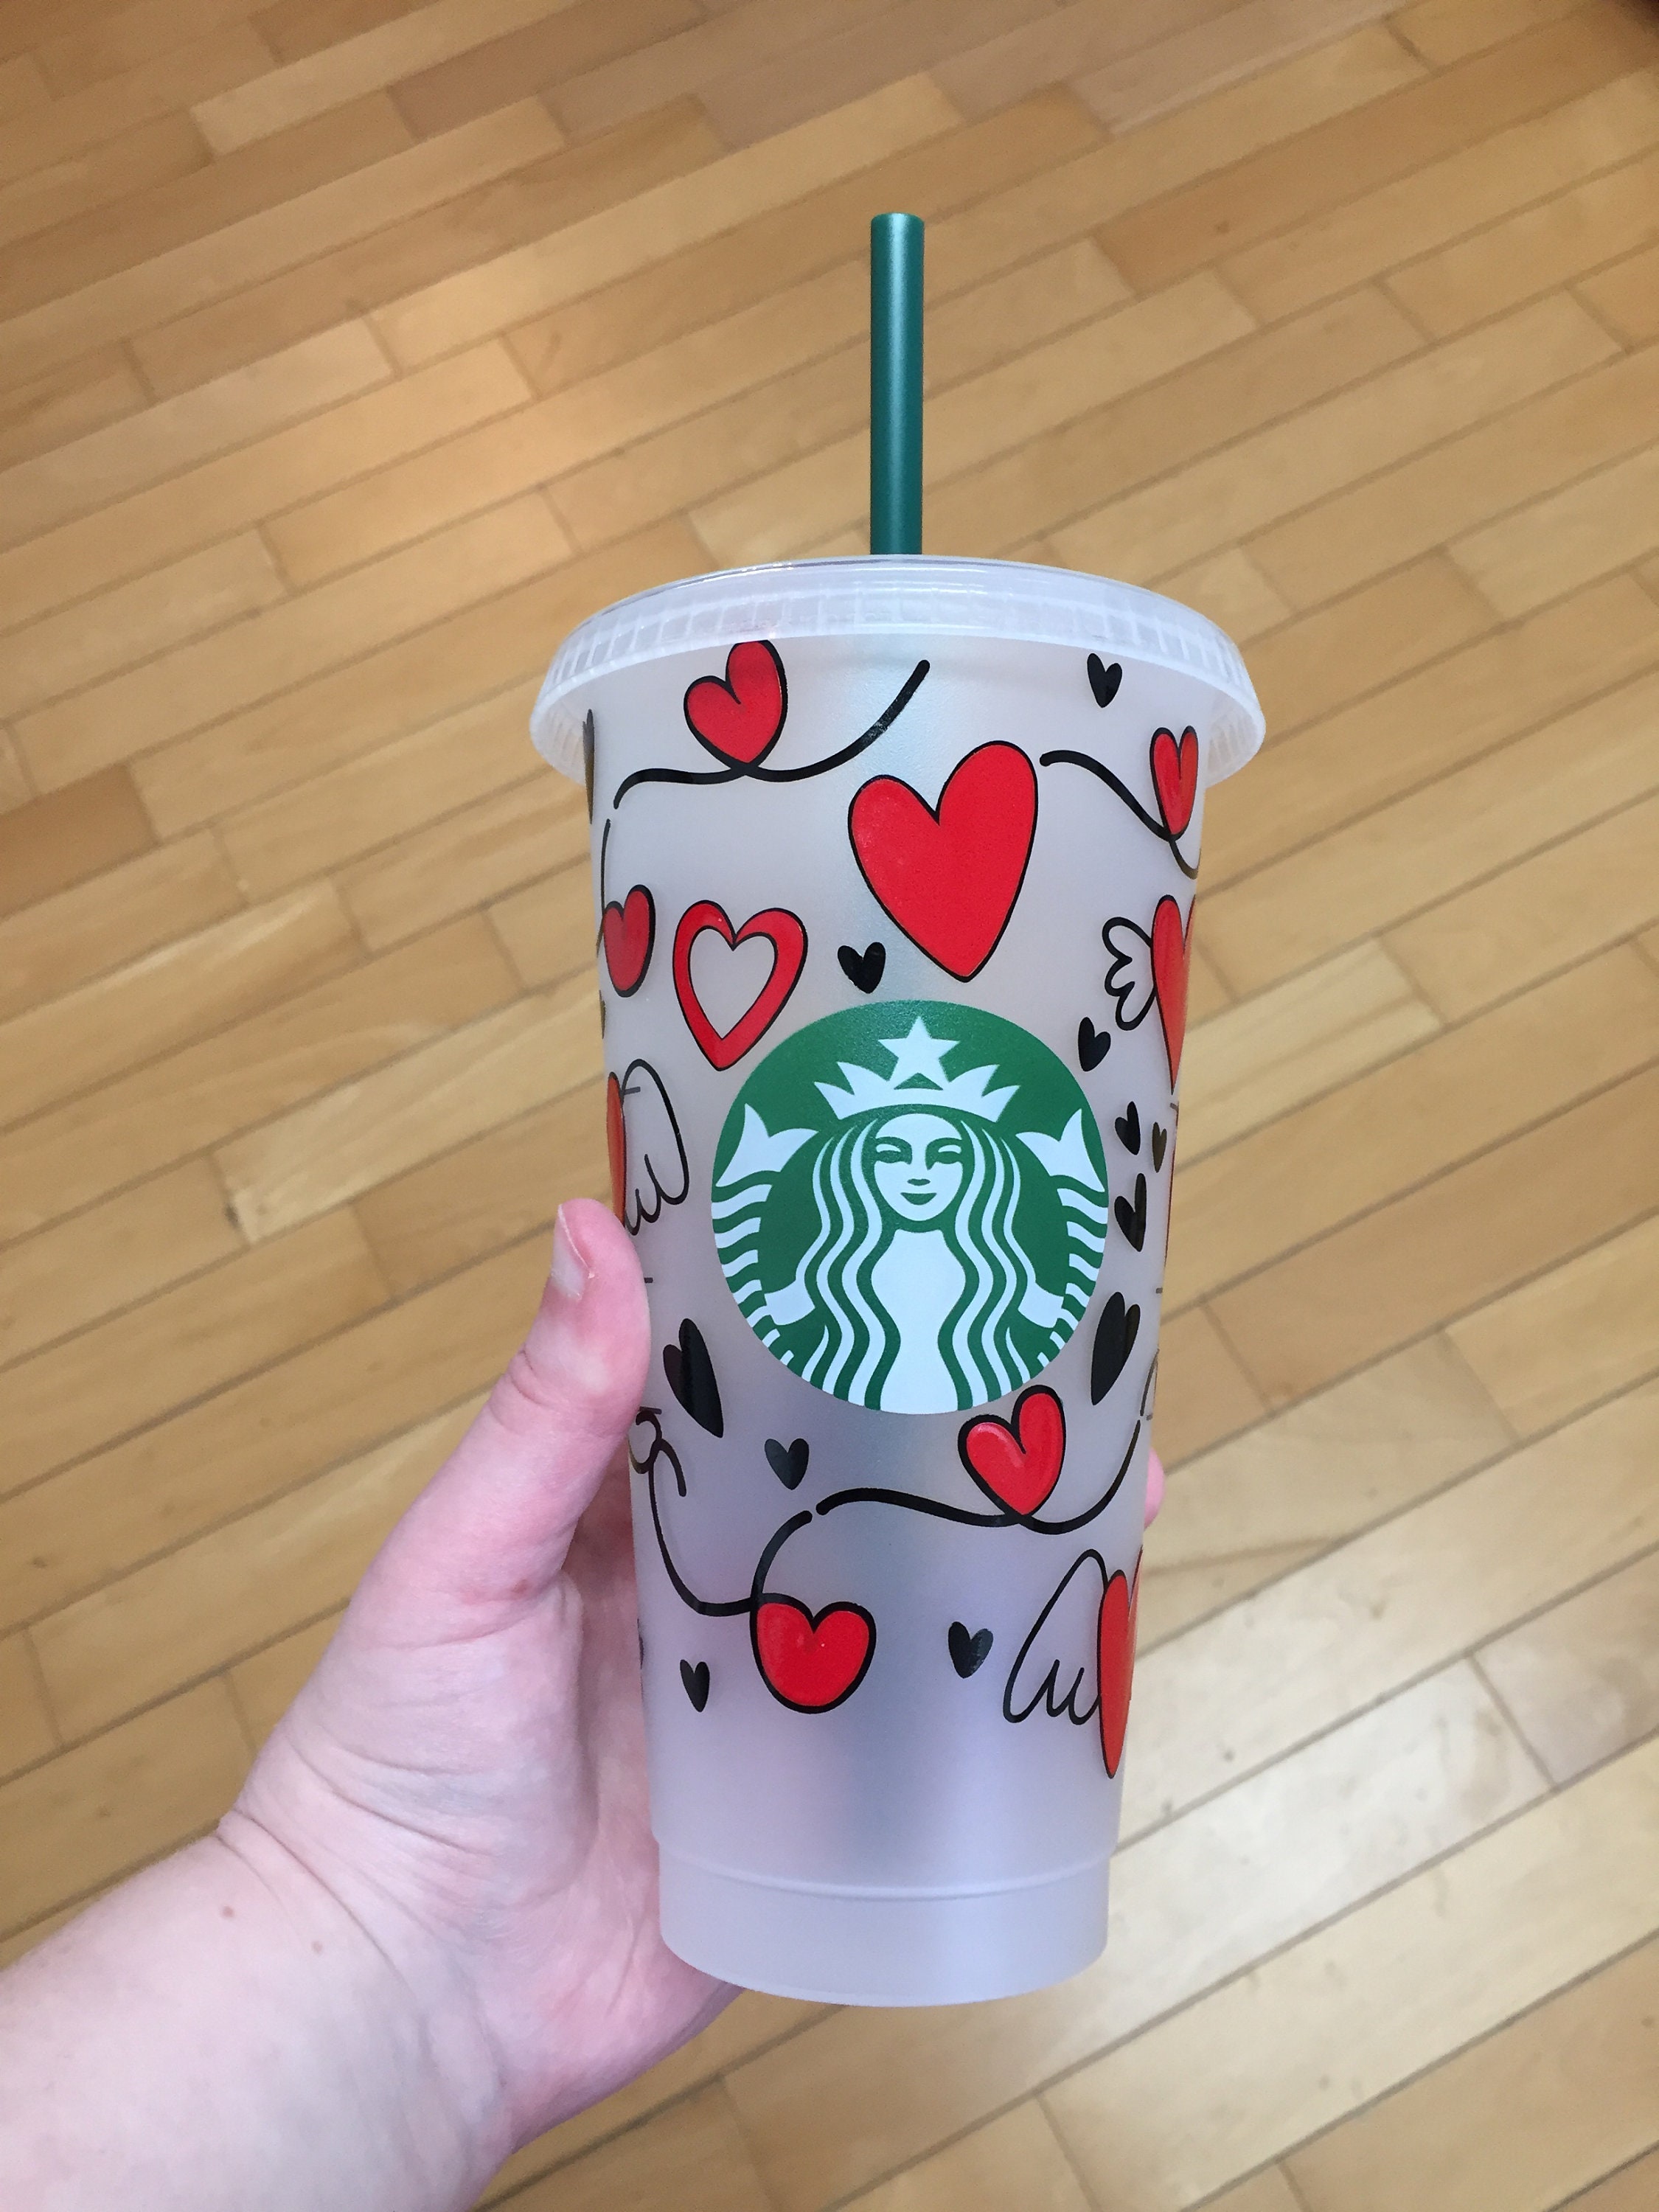 Valentines Kids Art with Starbucks Coffee Cup Holder